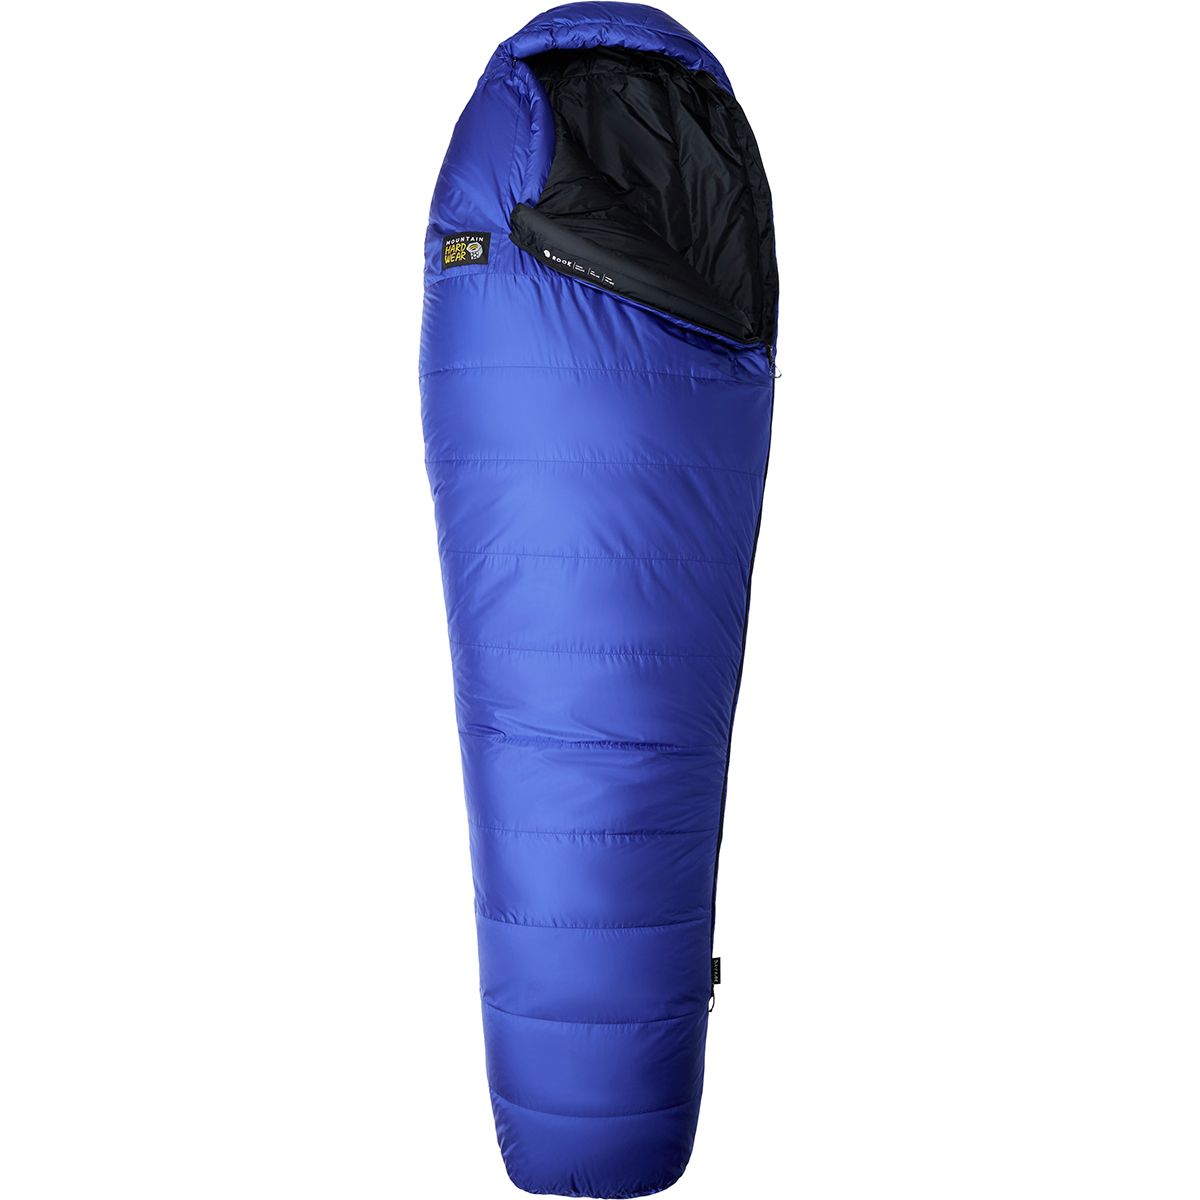 Mountain Hardwear Rook Sleeping Bag: 30F Camp